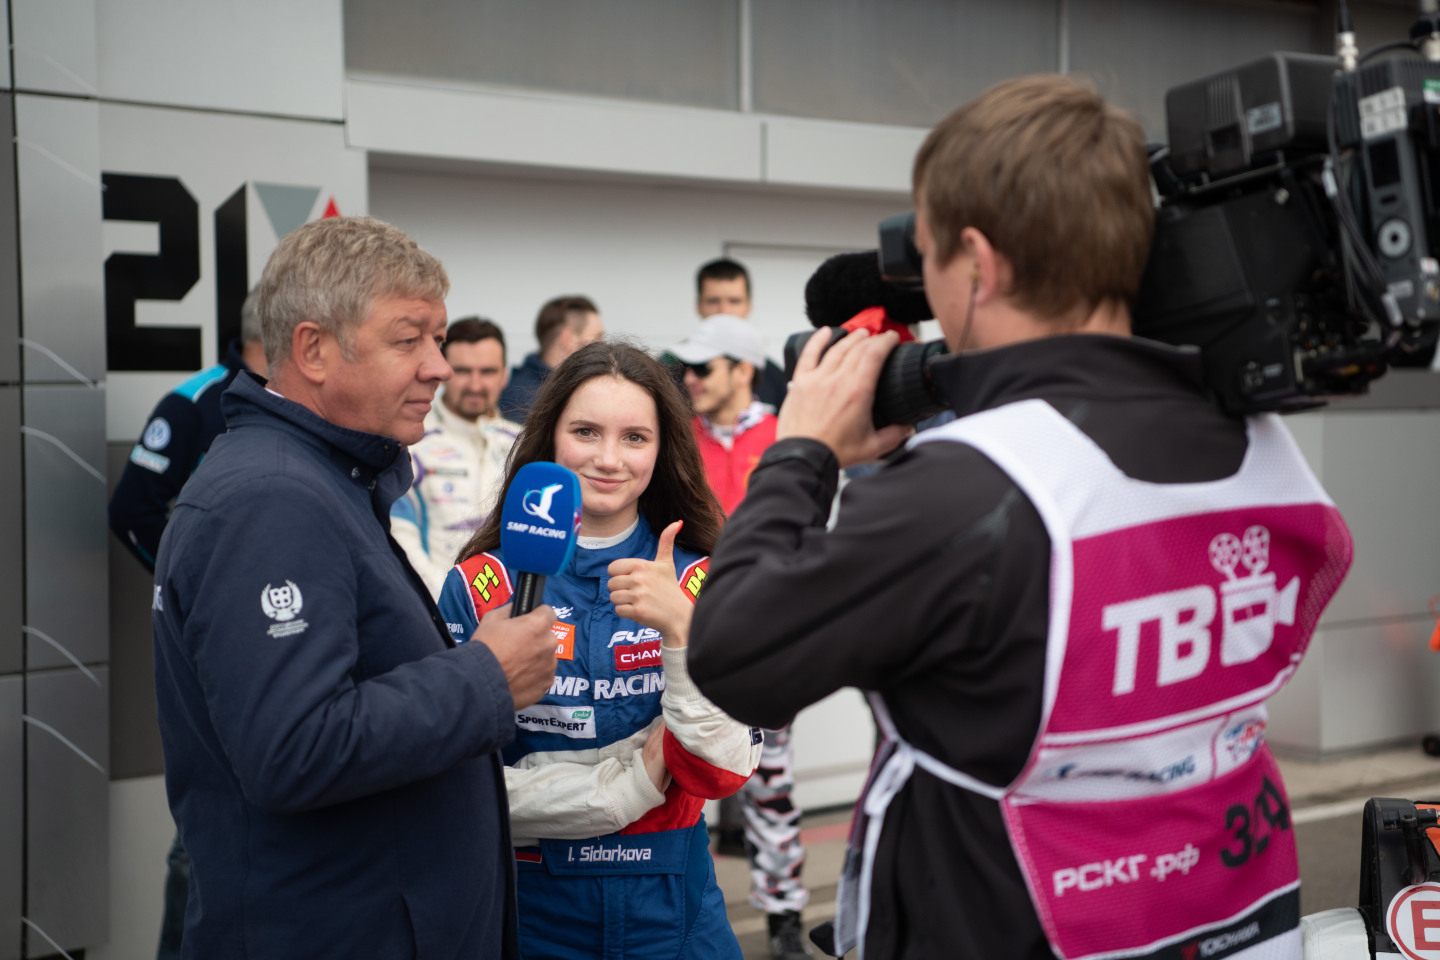 Ирина Сидоркова © SMP Racing